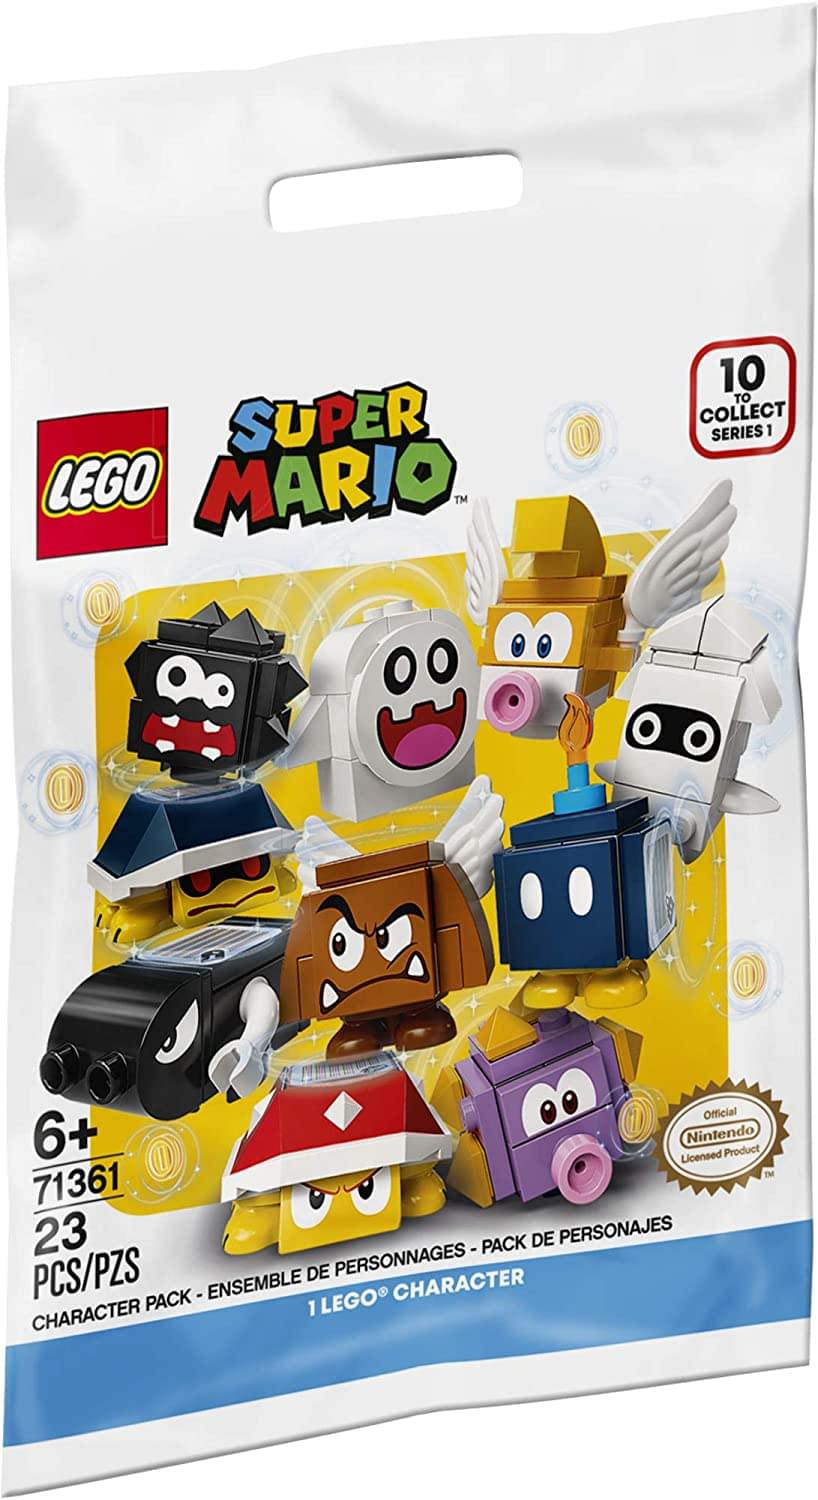 LEGO Super Mario 23 Piece Character Pack 71361 | One Random